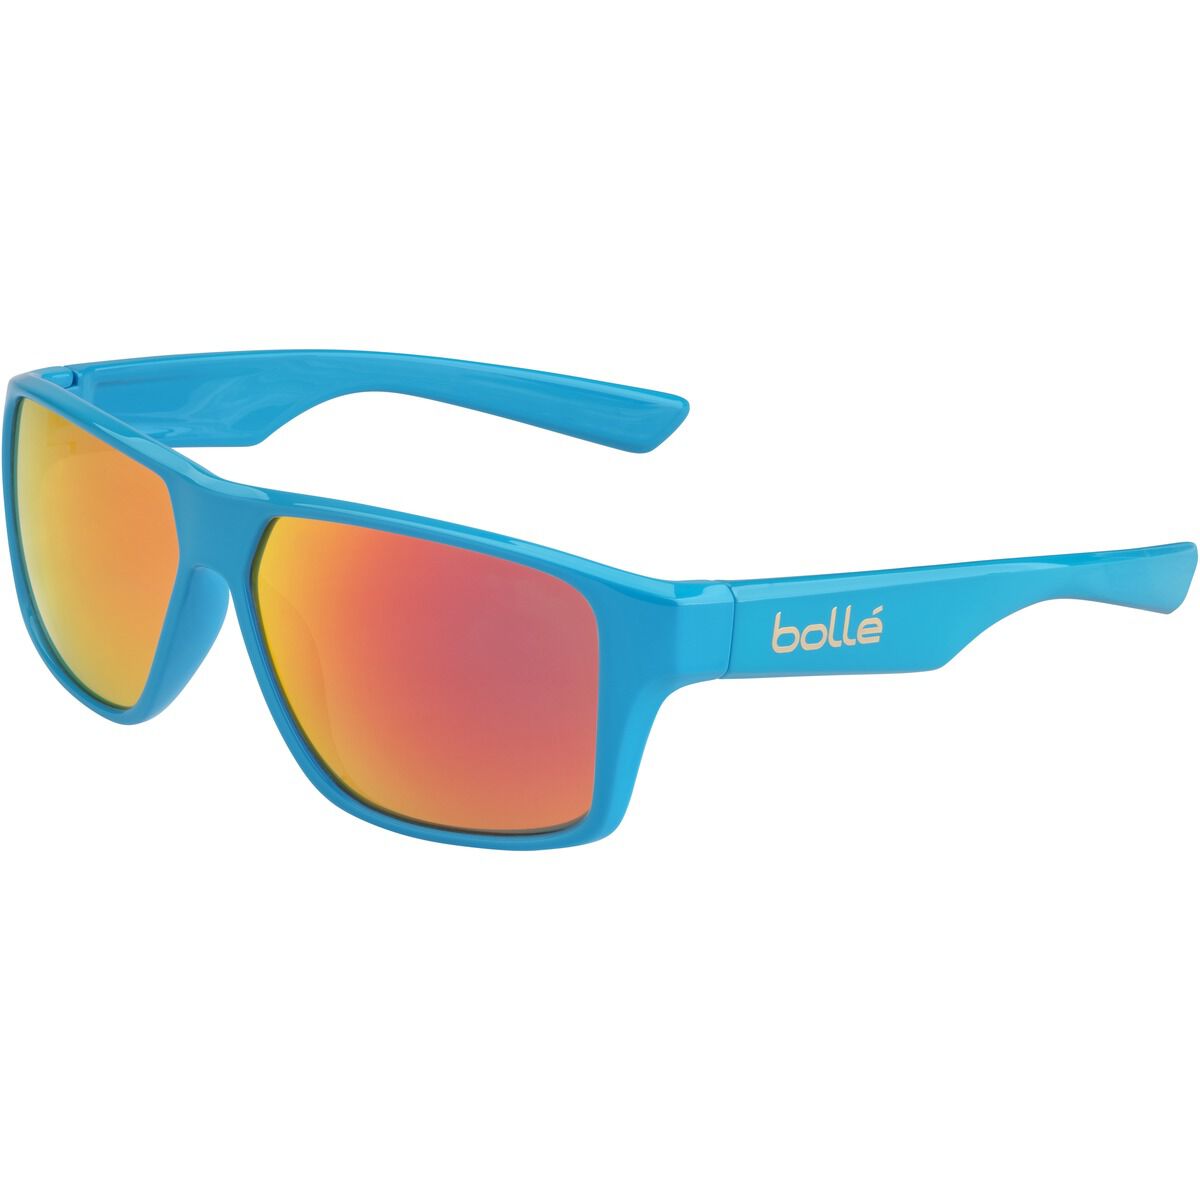 Bollé BRECKEN Sport Lifestyle Sunglasses - Polarized Lenses